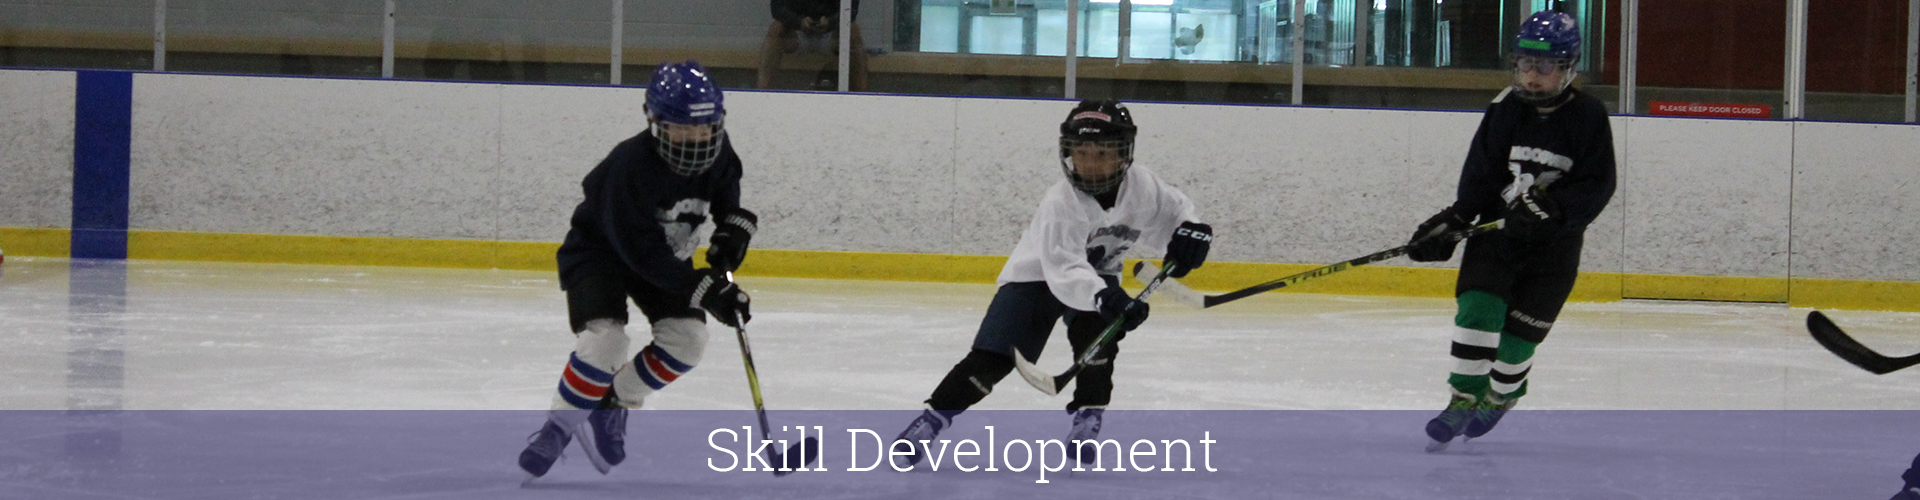 h-skill development